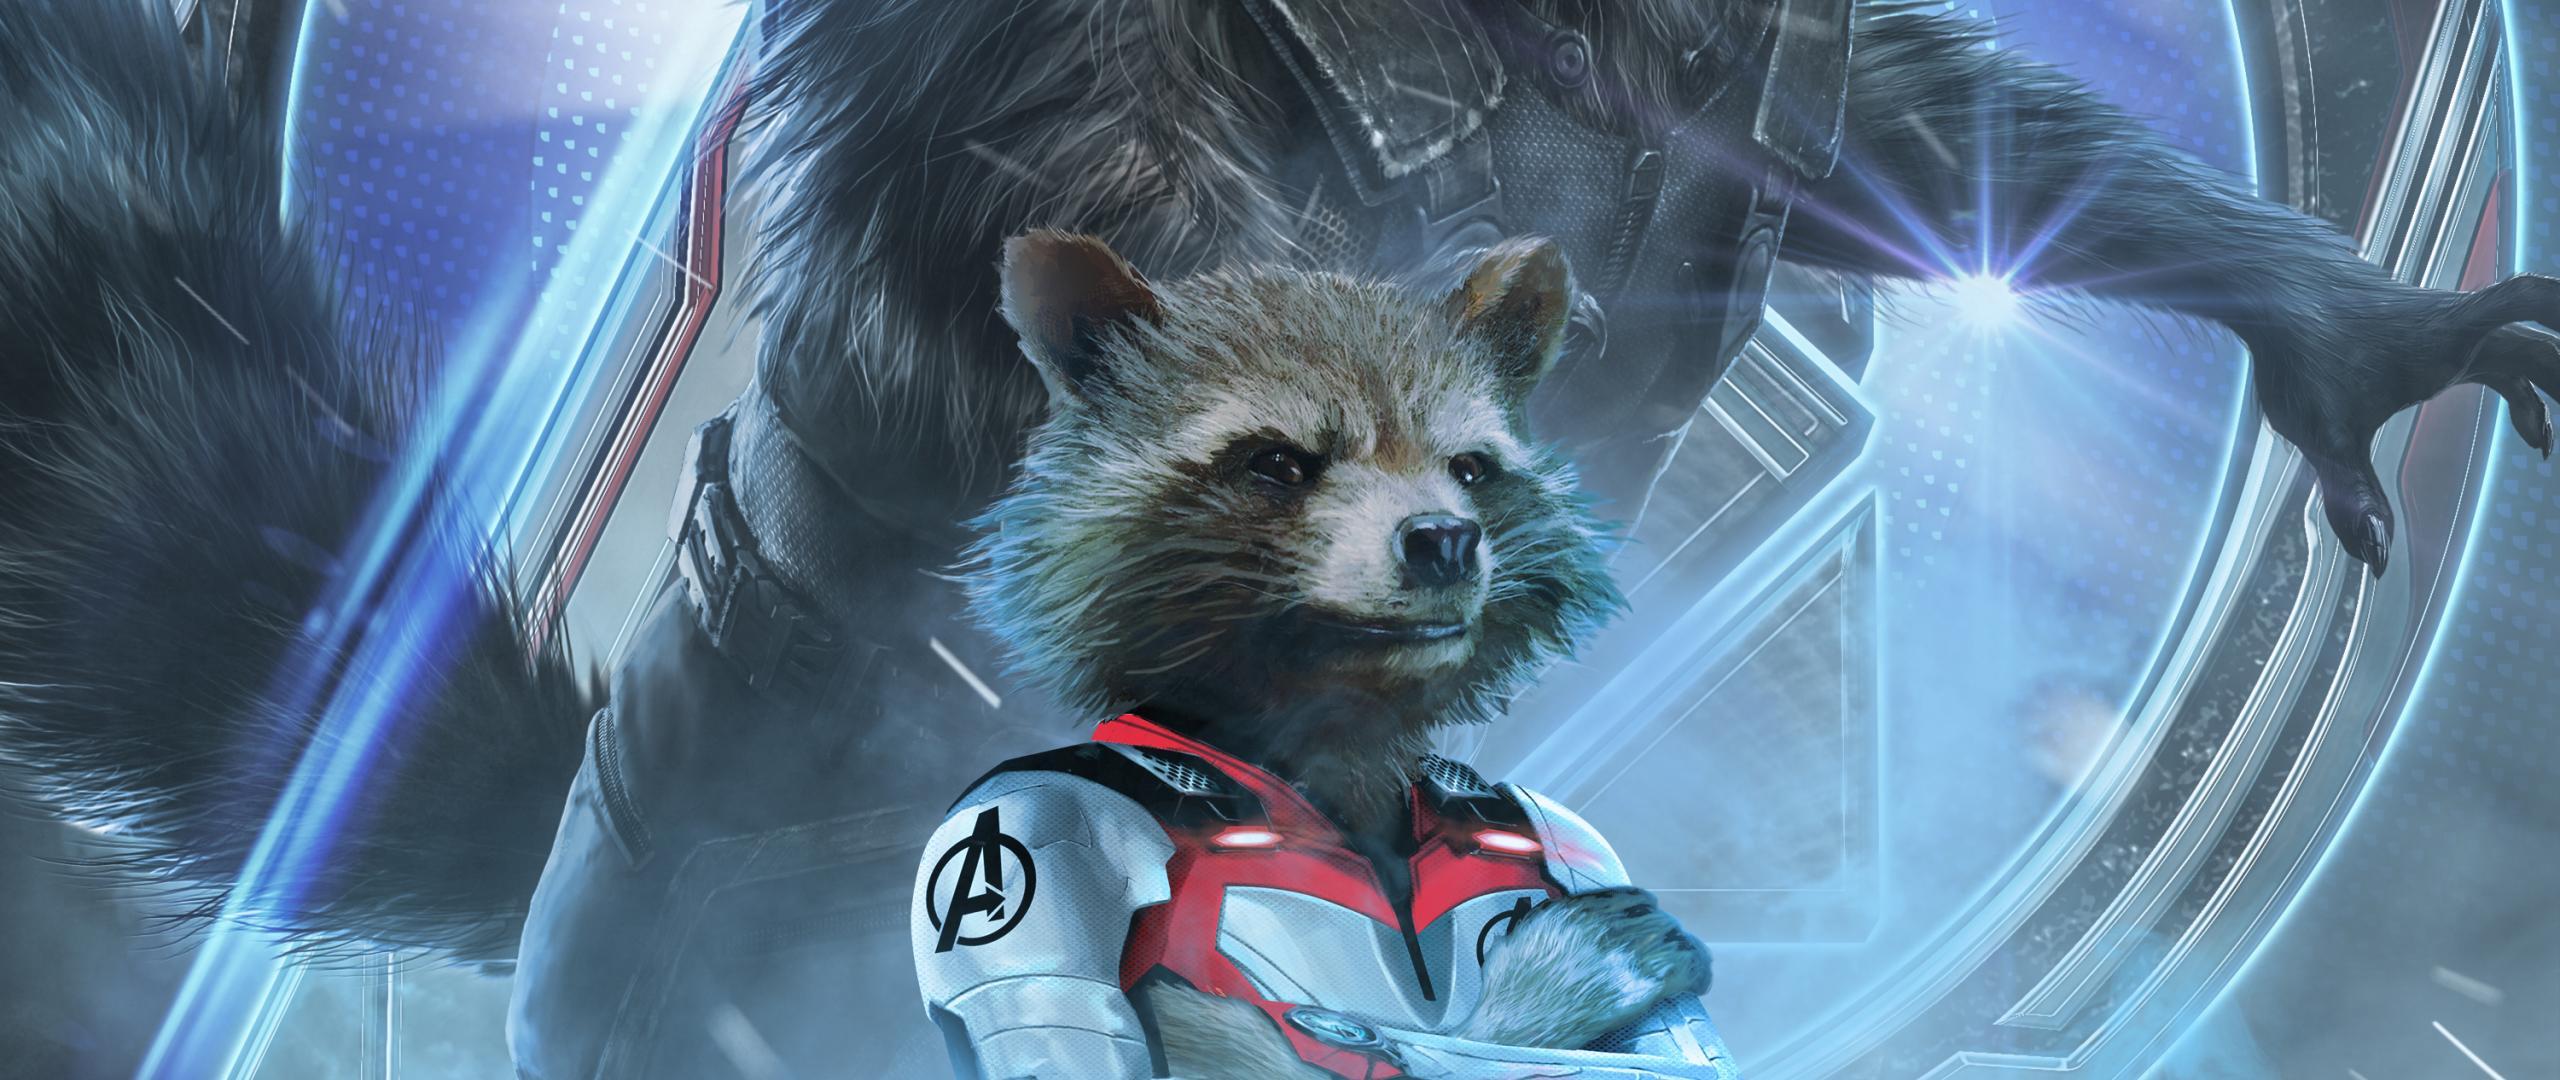 Avengers Endgame Rocket Raccoon Poster Art 2560x1080